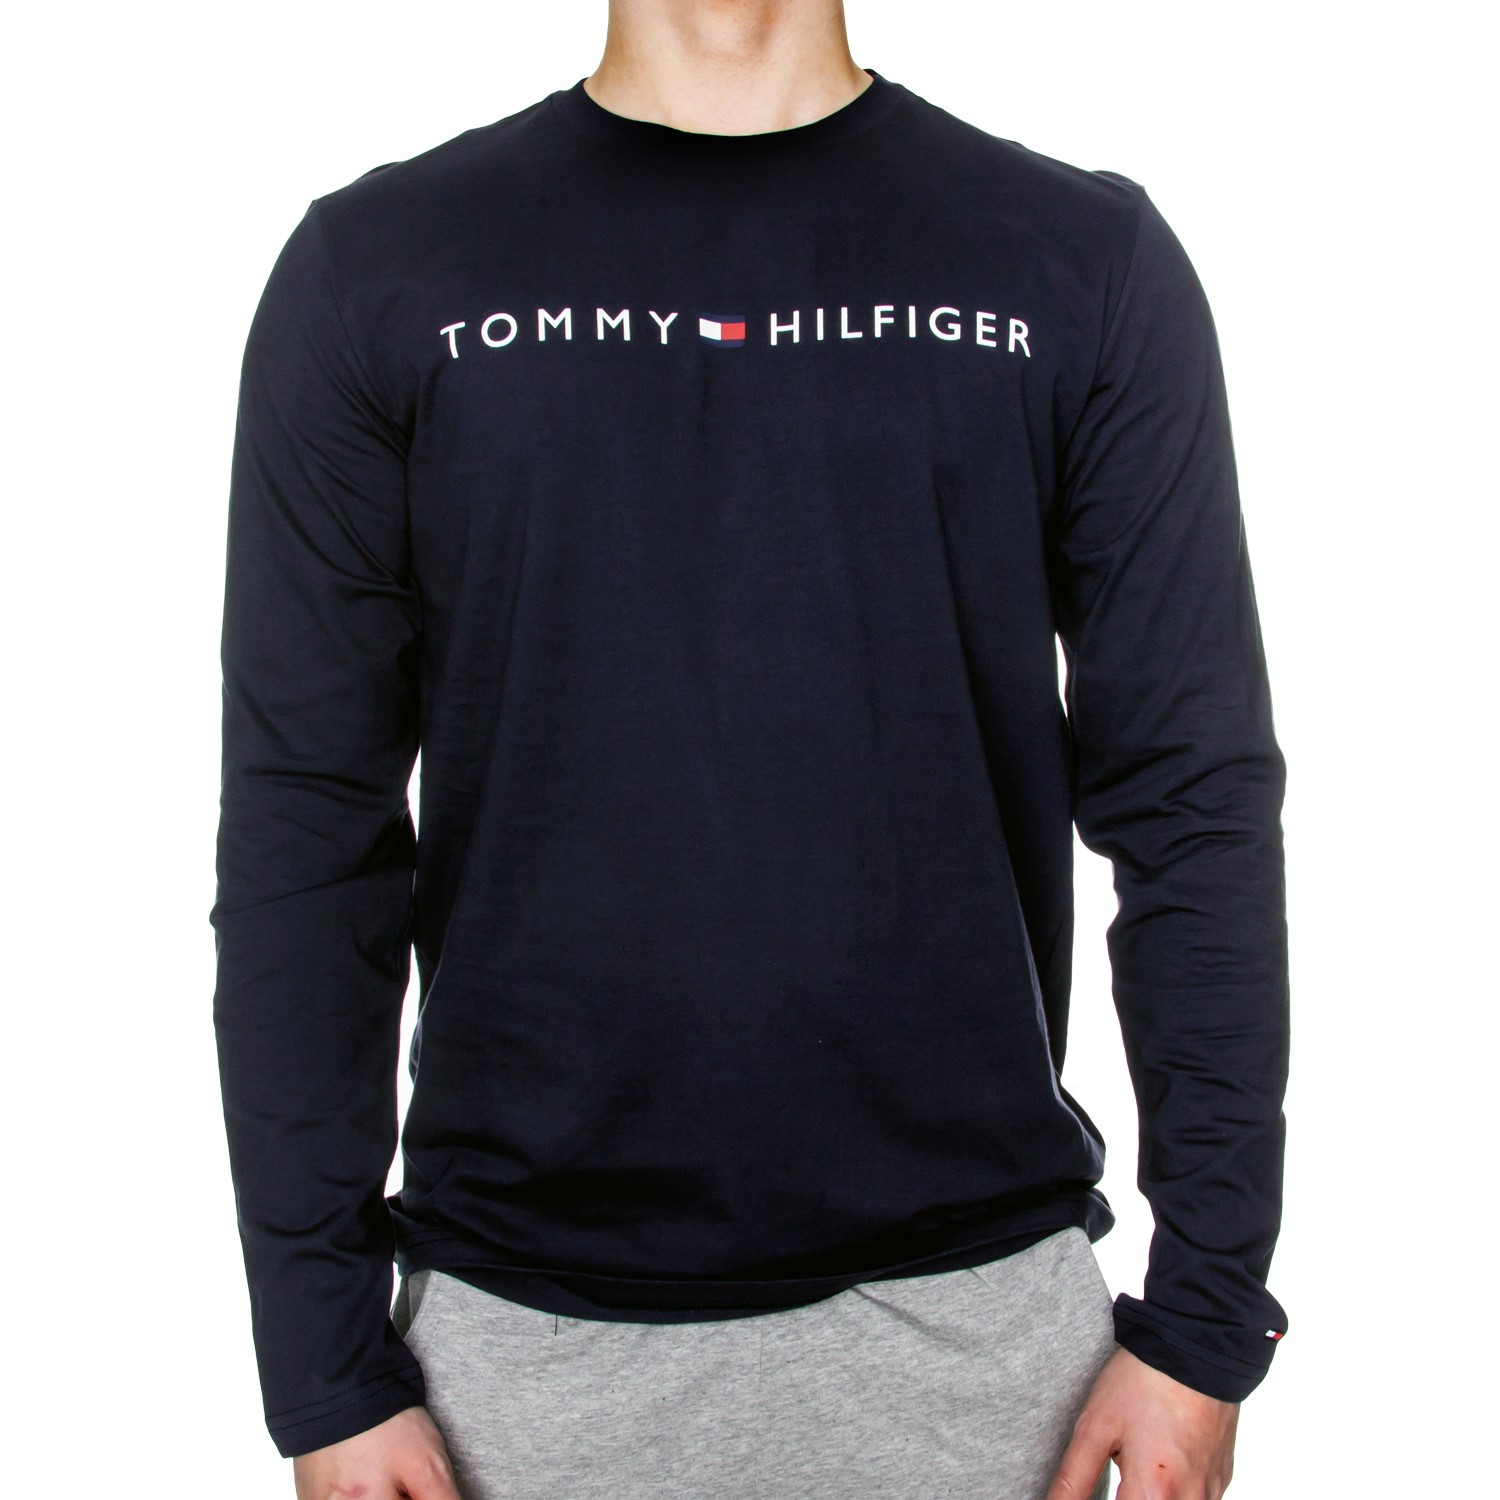 Tommy Hilfiger Original LS Crew Tee Long Sleeve